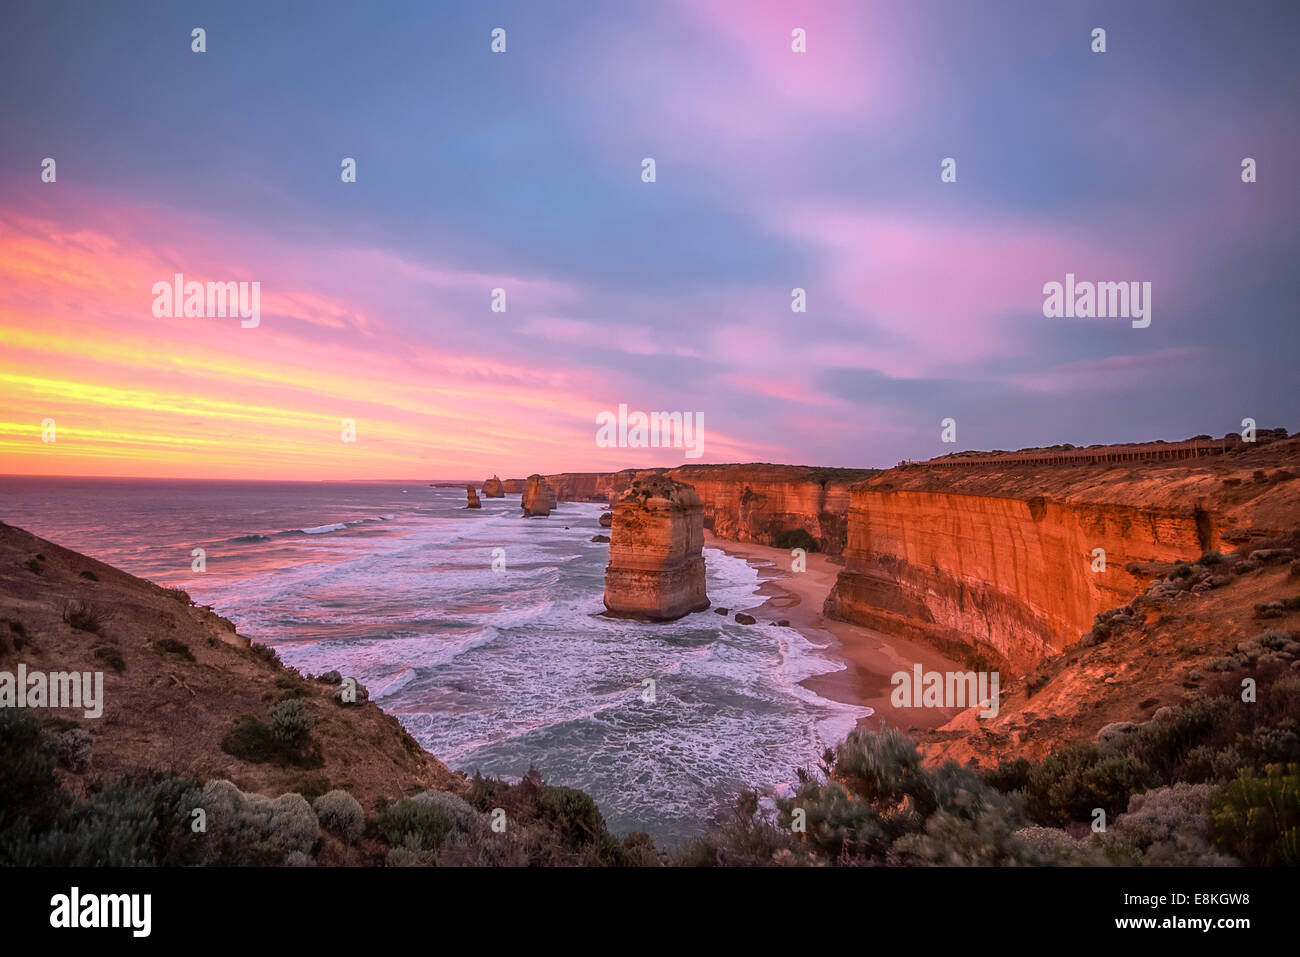 Australiens berühmten zwölf Apostel, bei Sonnenuntergang. Stockfoto